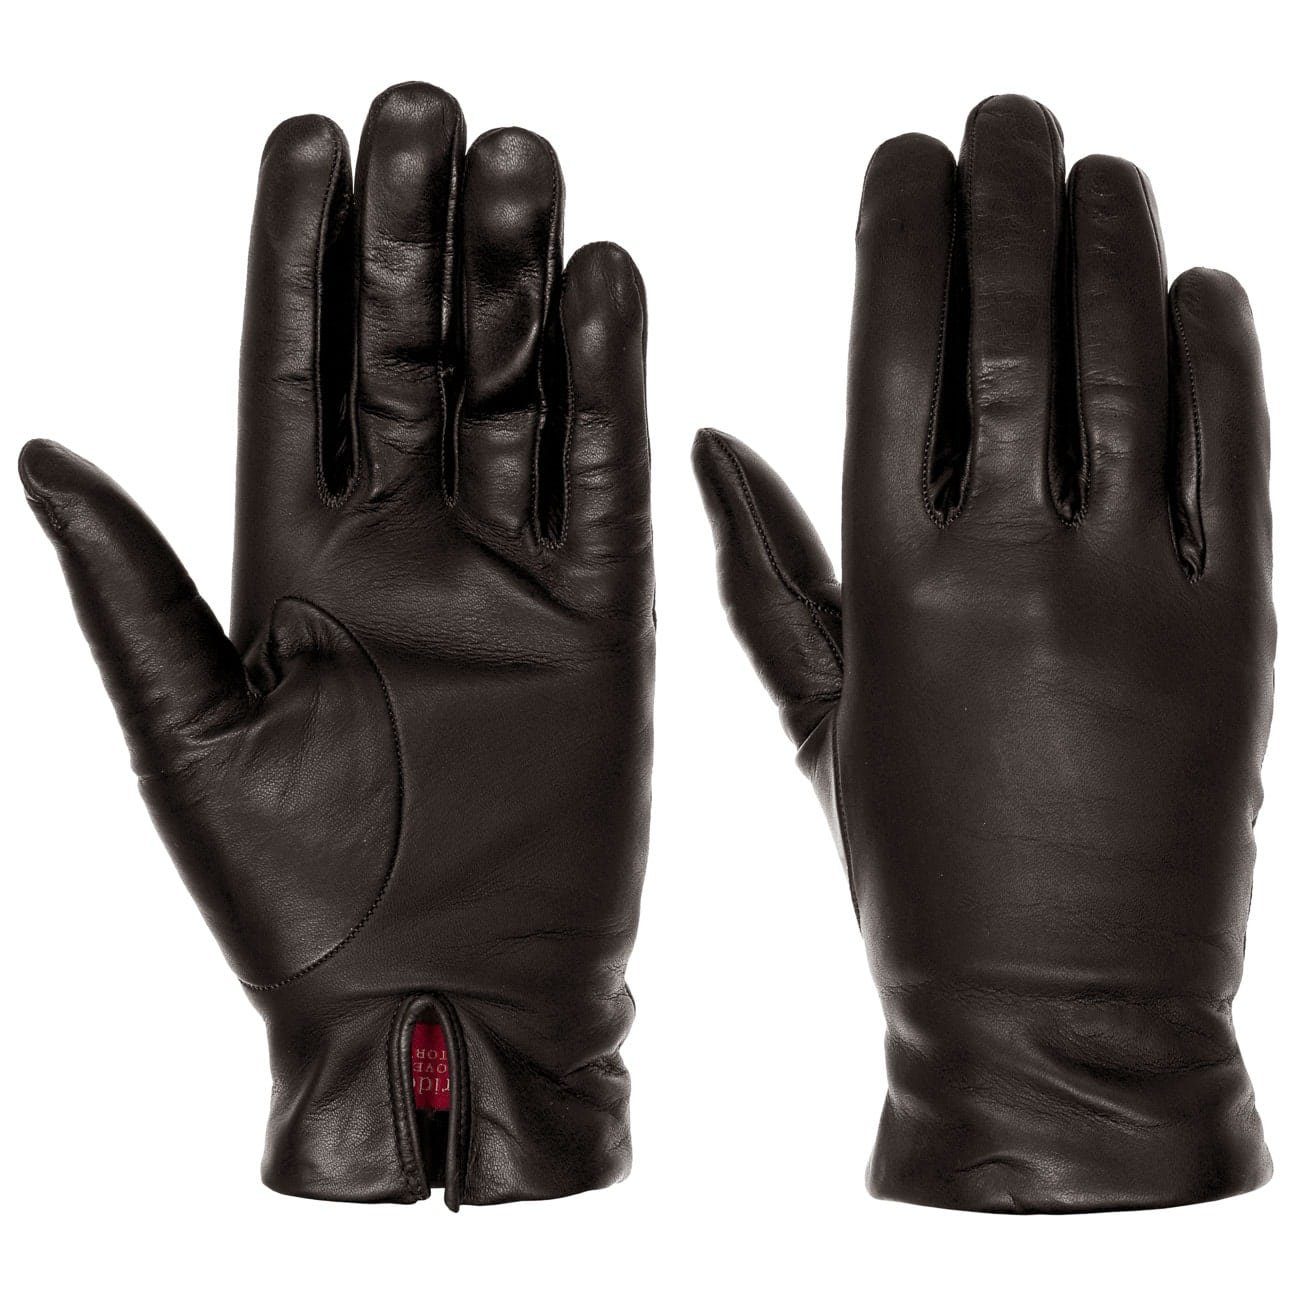 Caridei Lederhandschuhe Fingerhandschuhe mit Futter, Made in Italy schwarz | Handschuhe